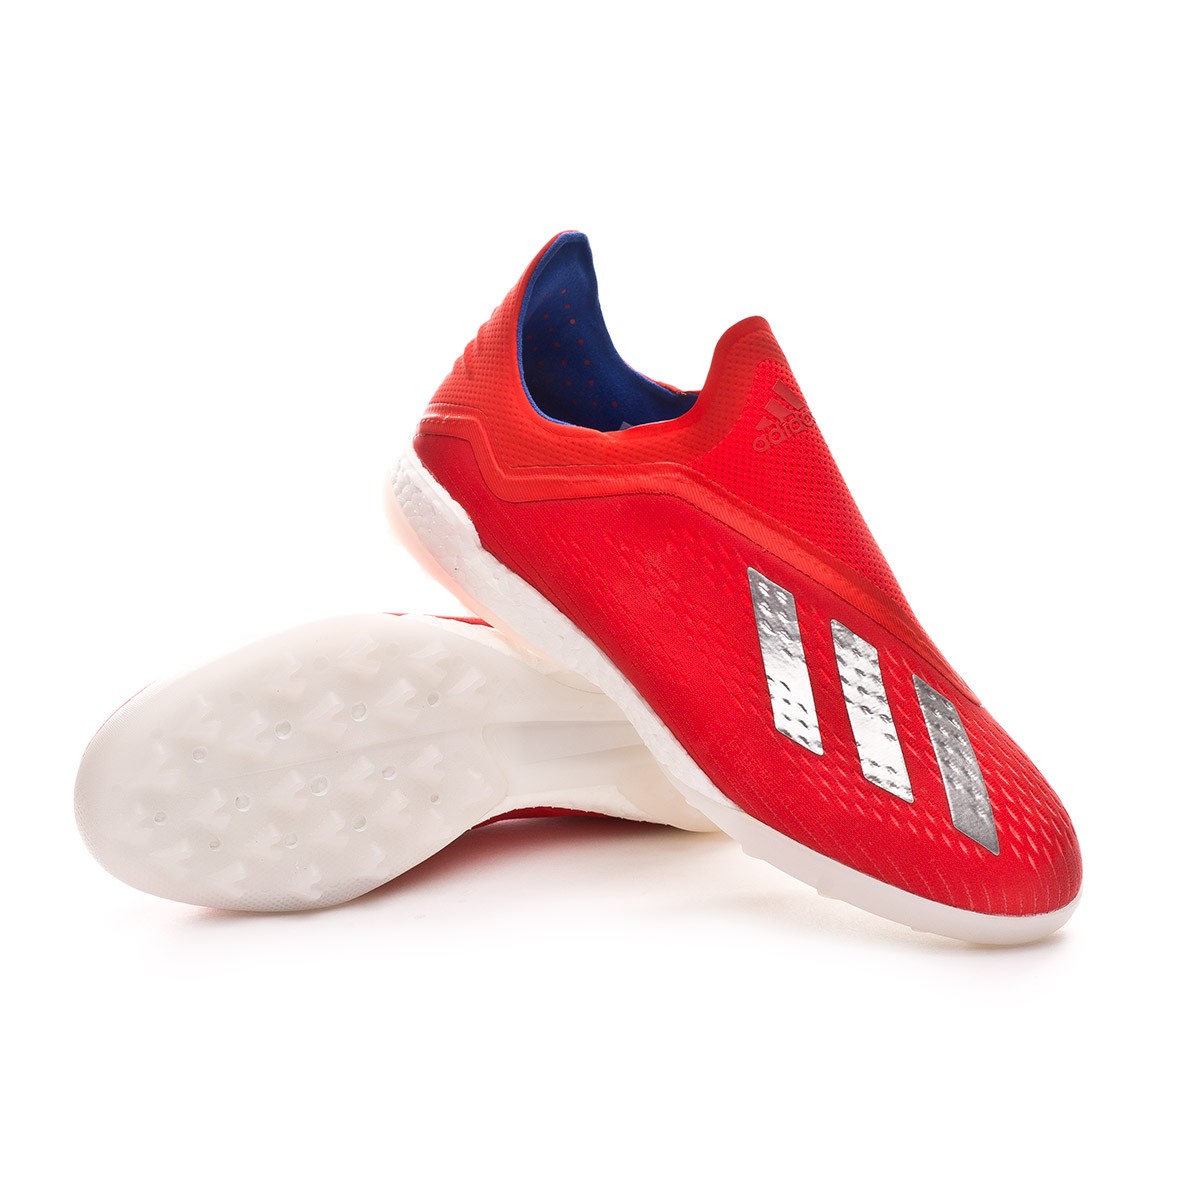 Football Boot adidas X Tango 18+ Turf Active red-Silver metallic-Bold blue  - Football store Fútbol Emotion